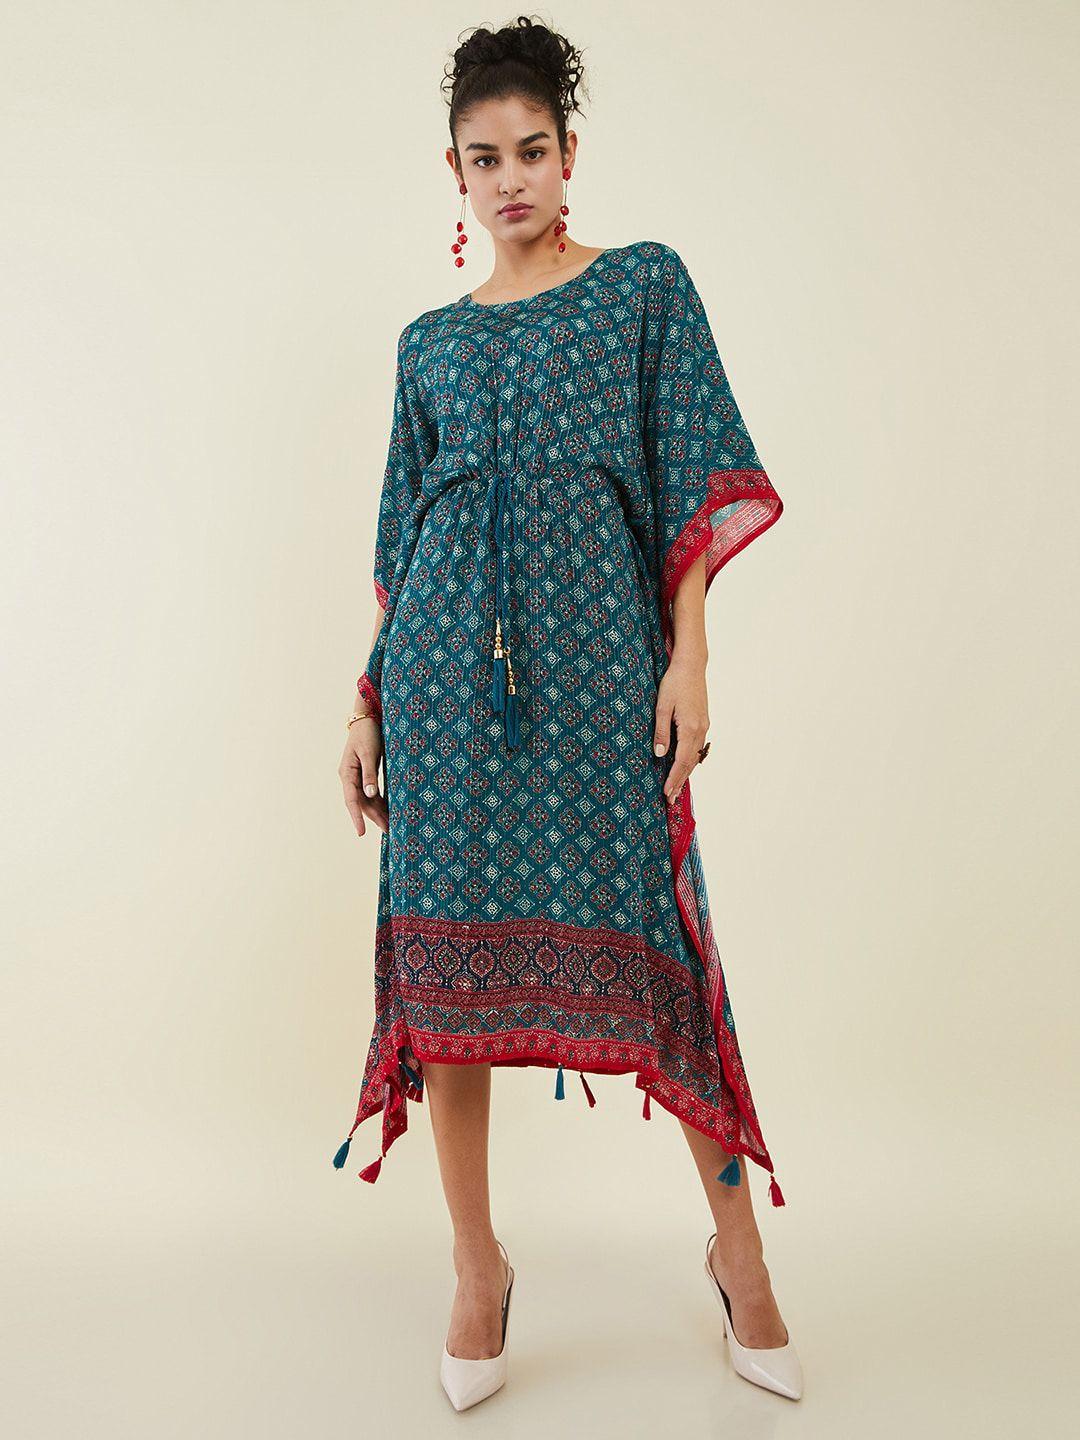 soch teal blue ethnic motifs printed sequined kaftan midi ethnic dress